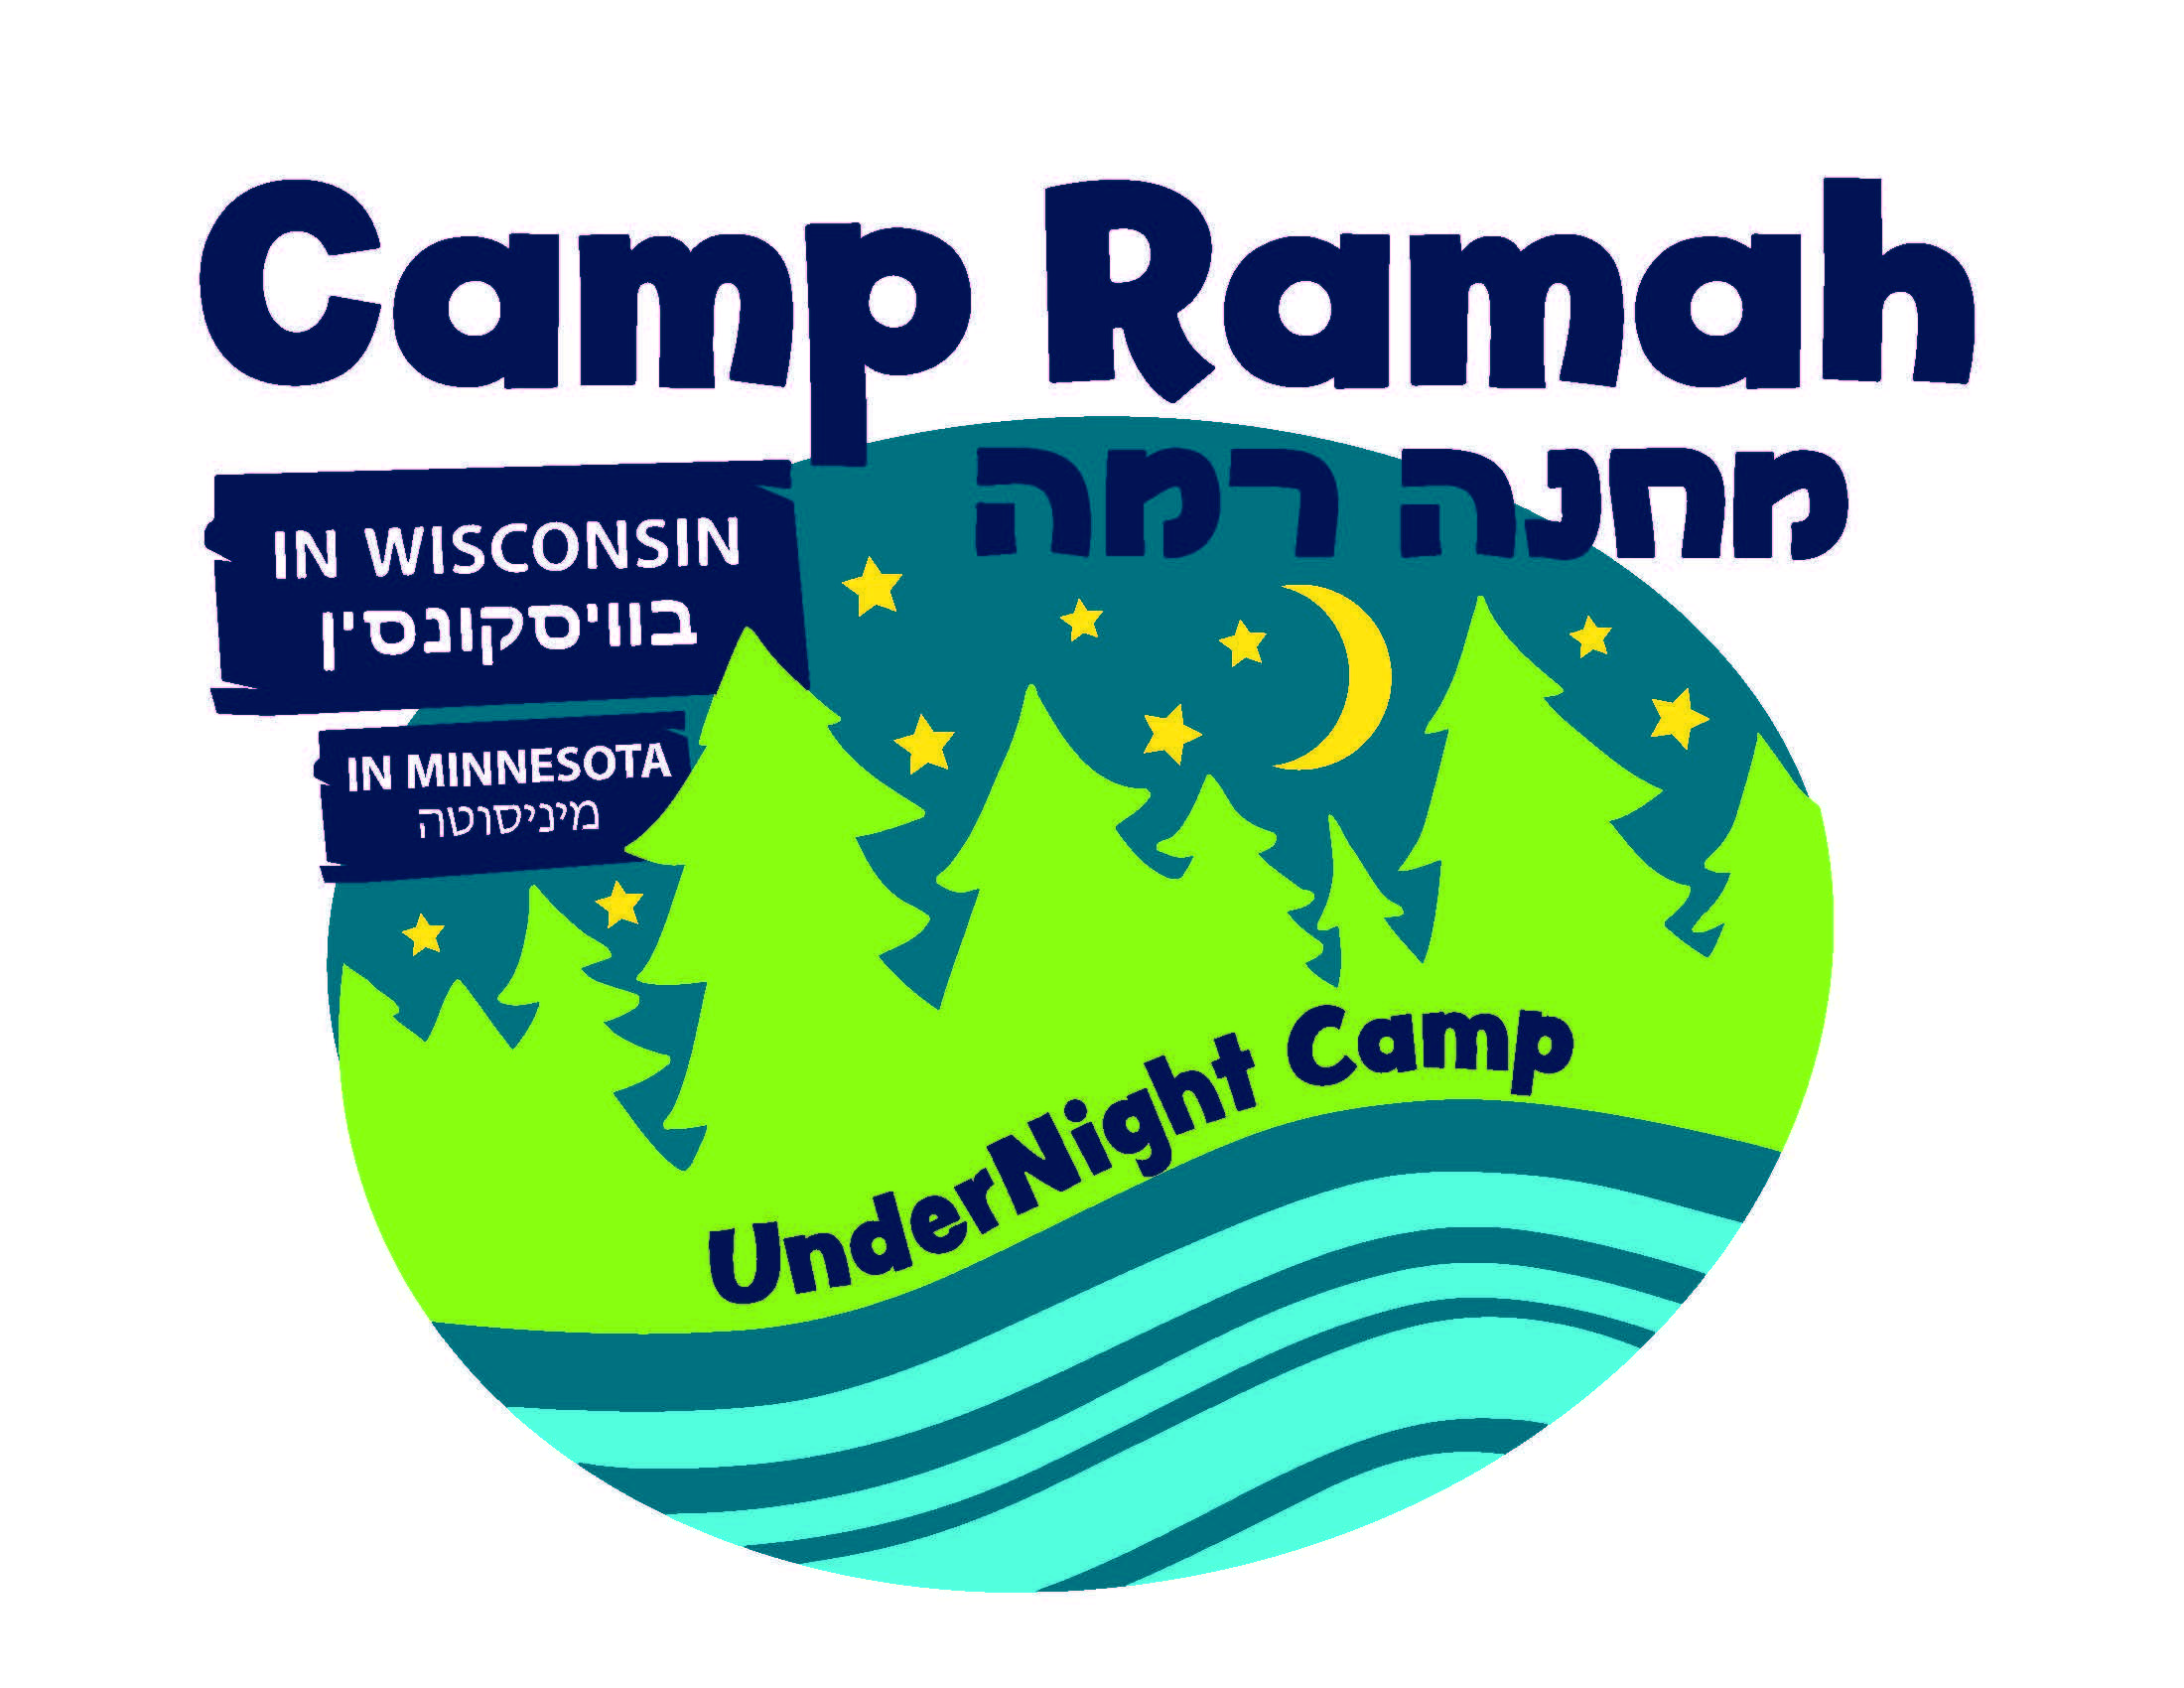 Camp Ramah Machaneh Erev (Undernight Camp) in the Twin Cities